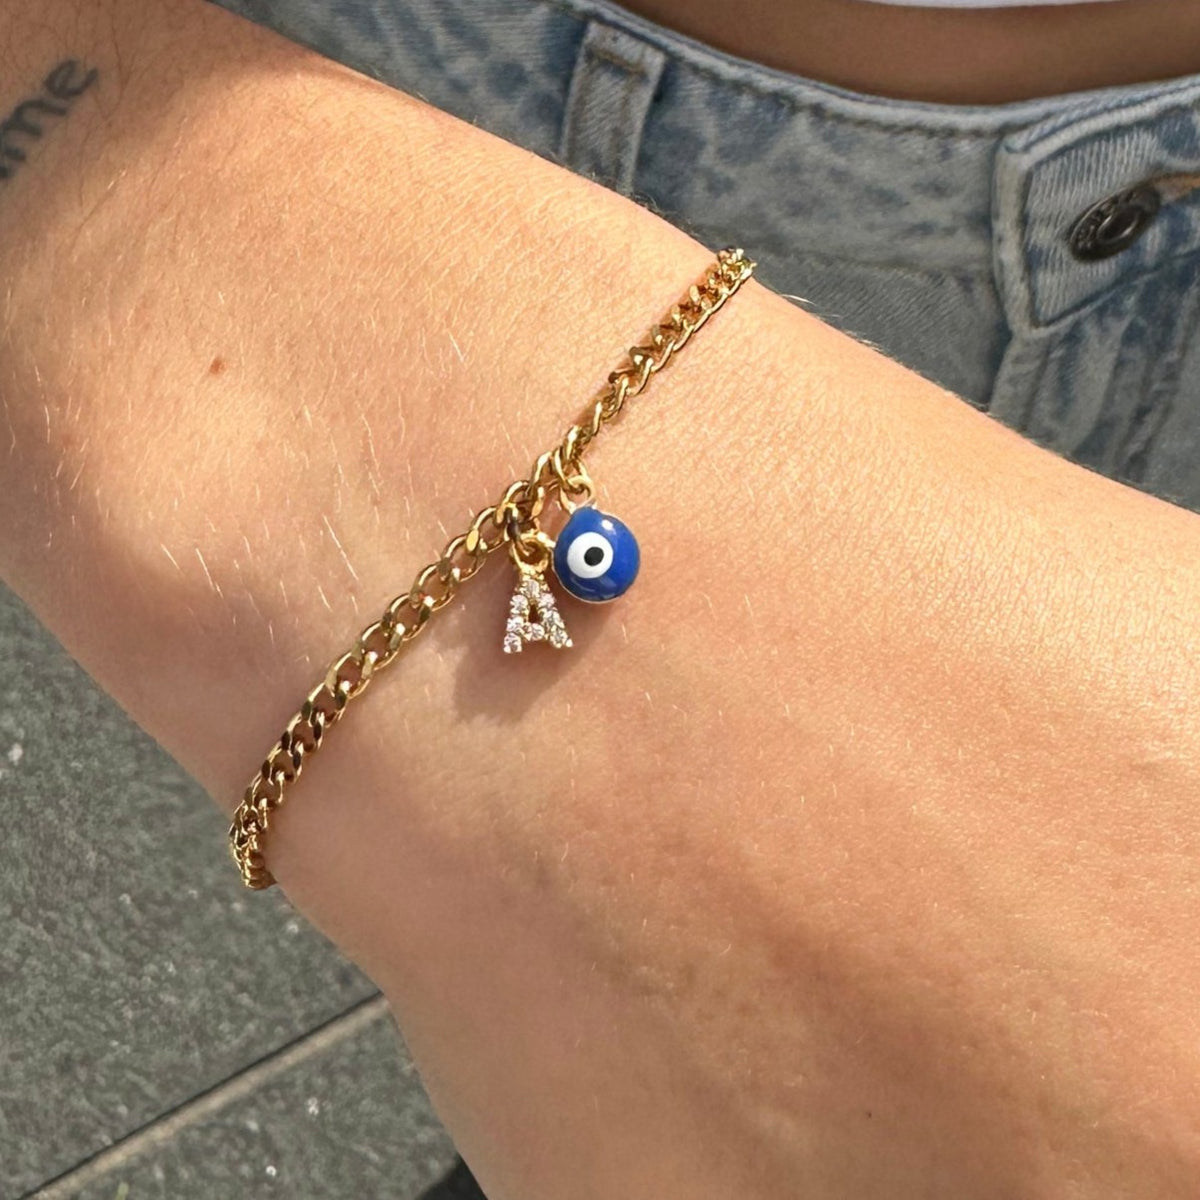 Permanent bracelet